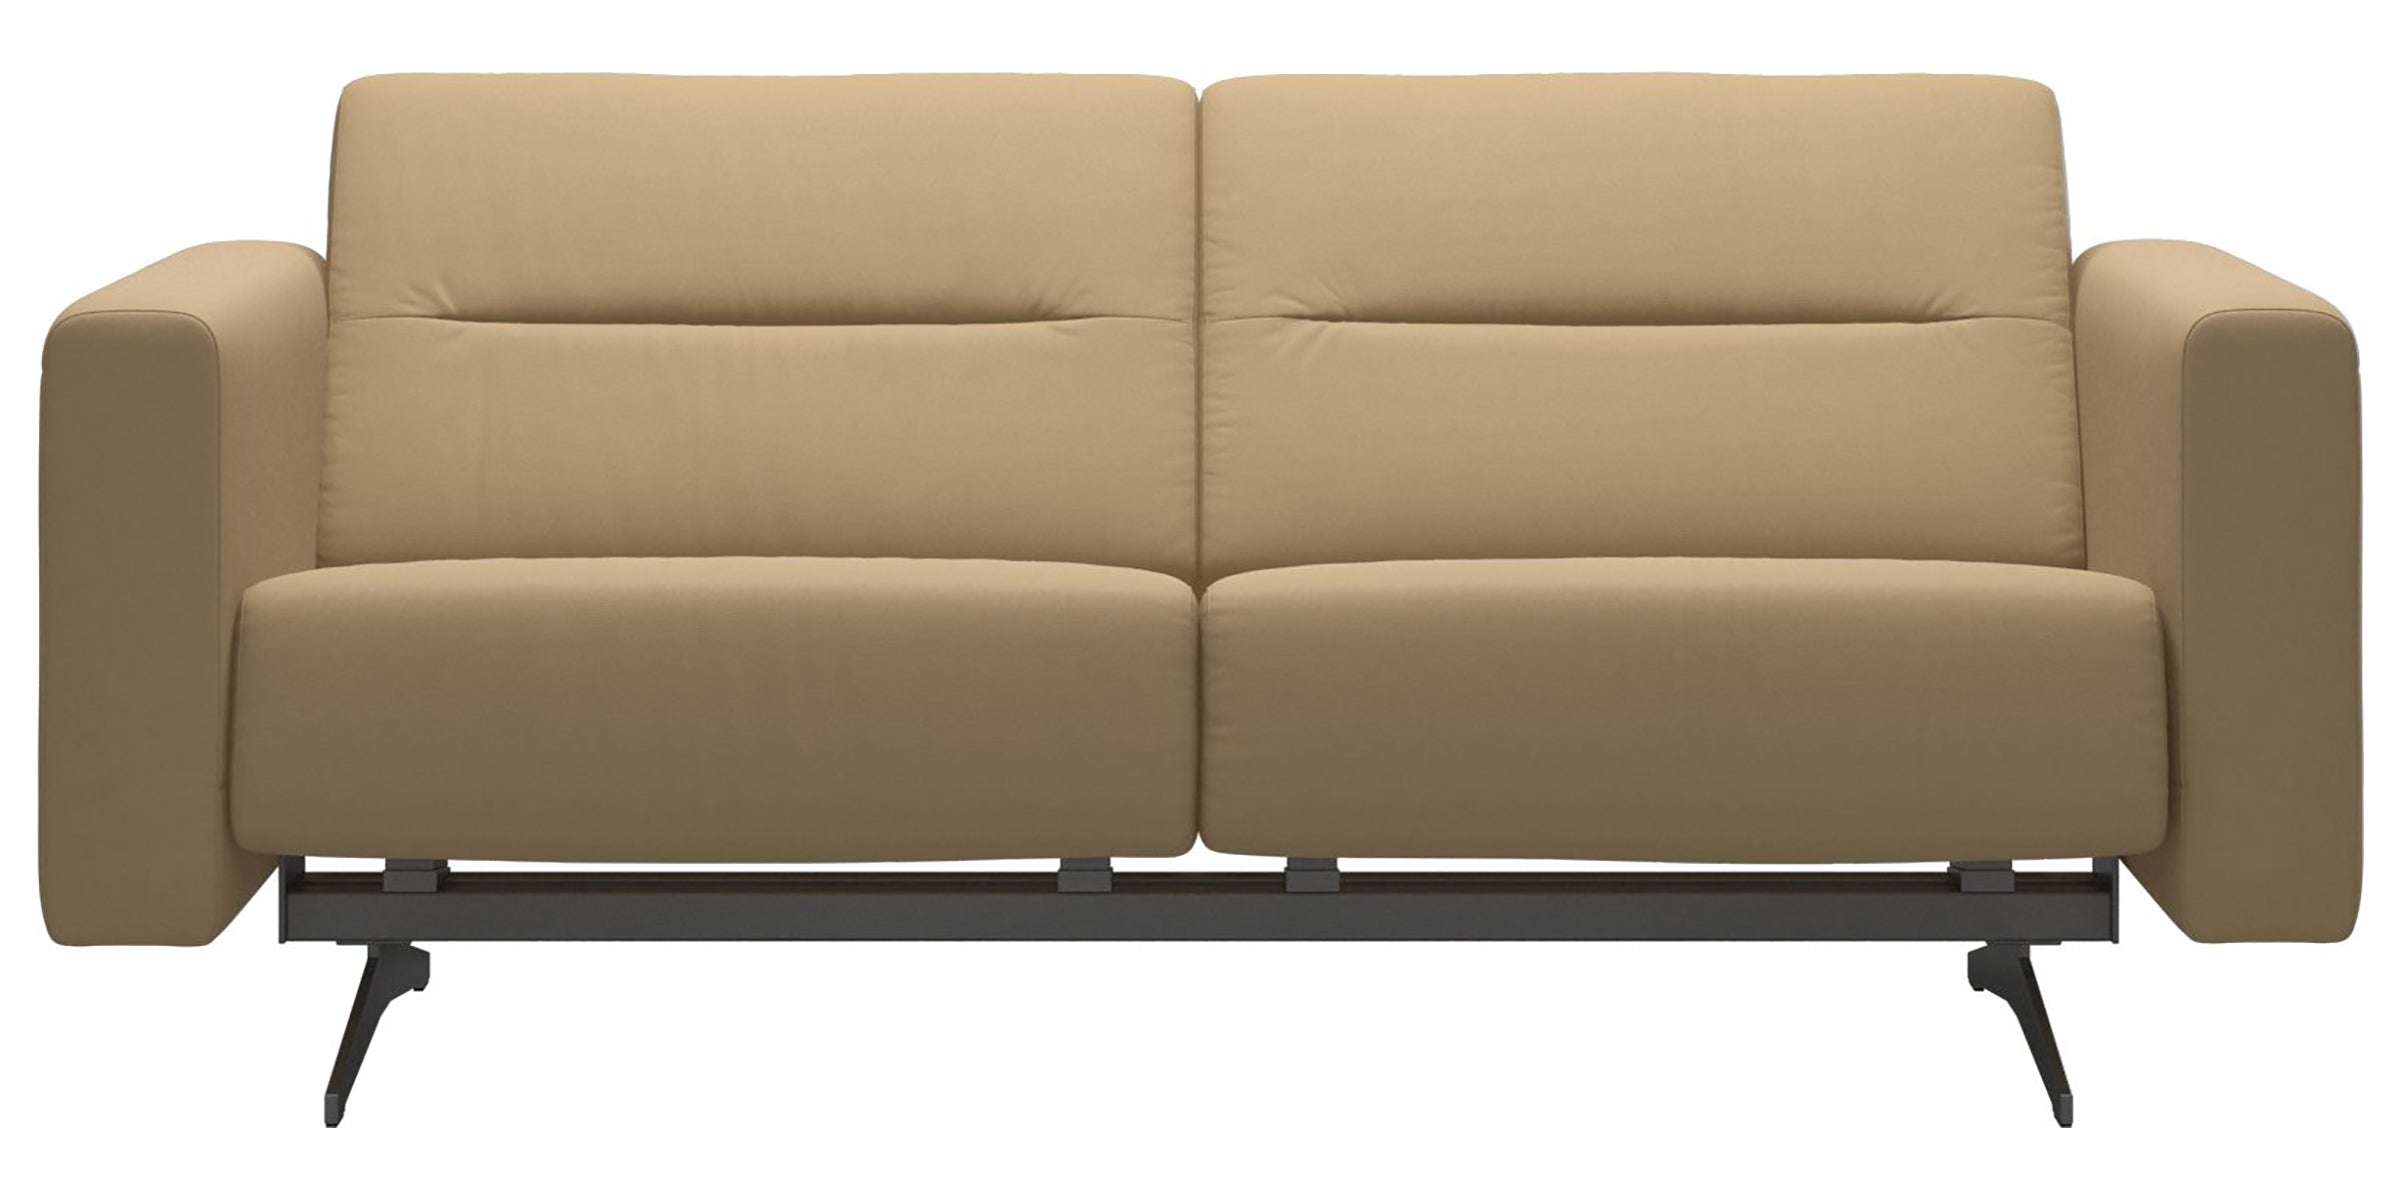 Paloma Leather Sand & Chrome Base | Stressless Stella 2-Seater Sofa with S2 Arm | Valley Ridge Furniture